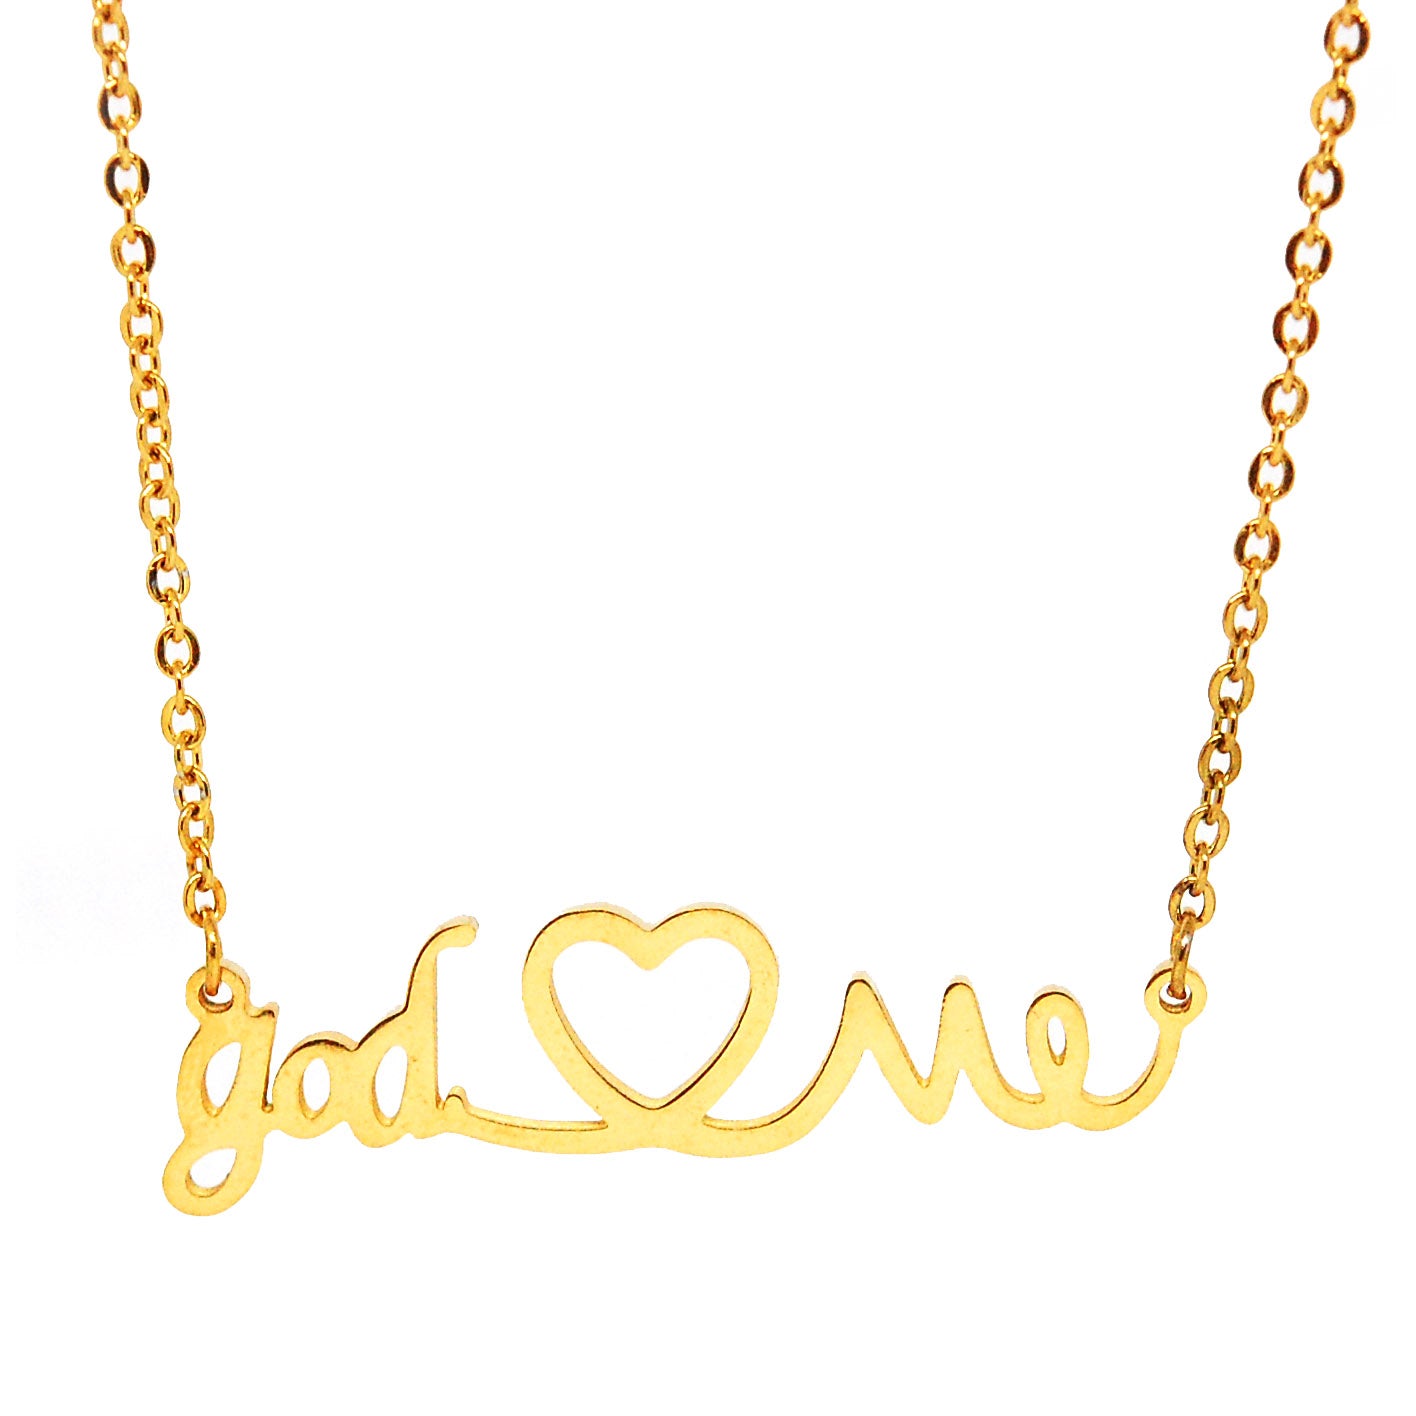 ESN 6025: All IPG "God Loves Me" Necklace